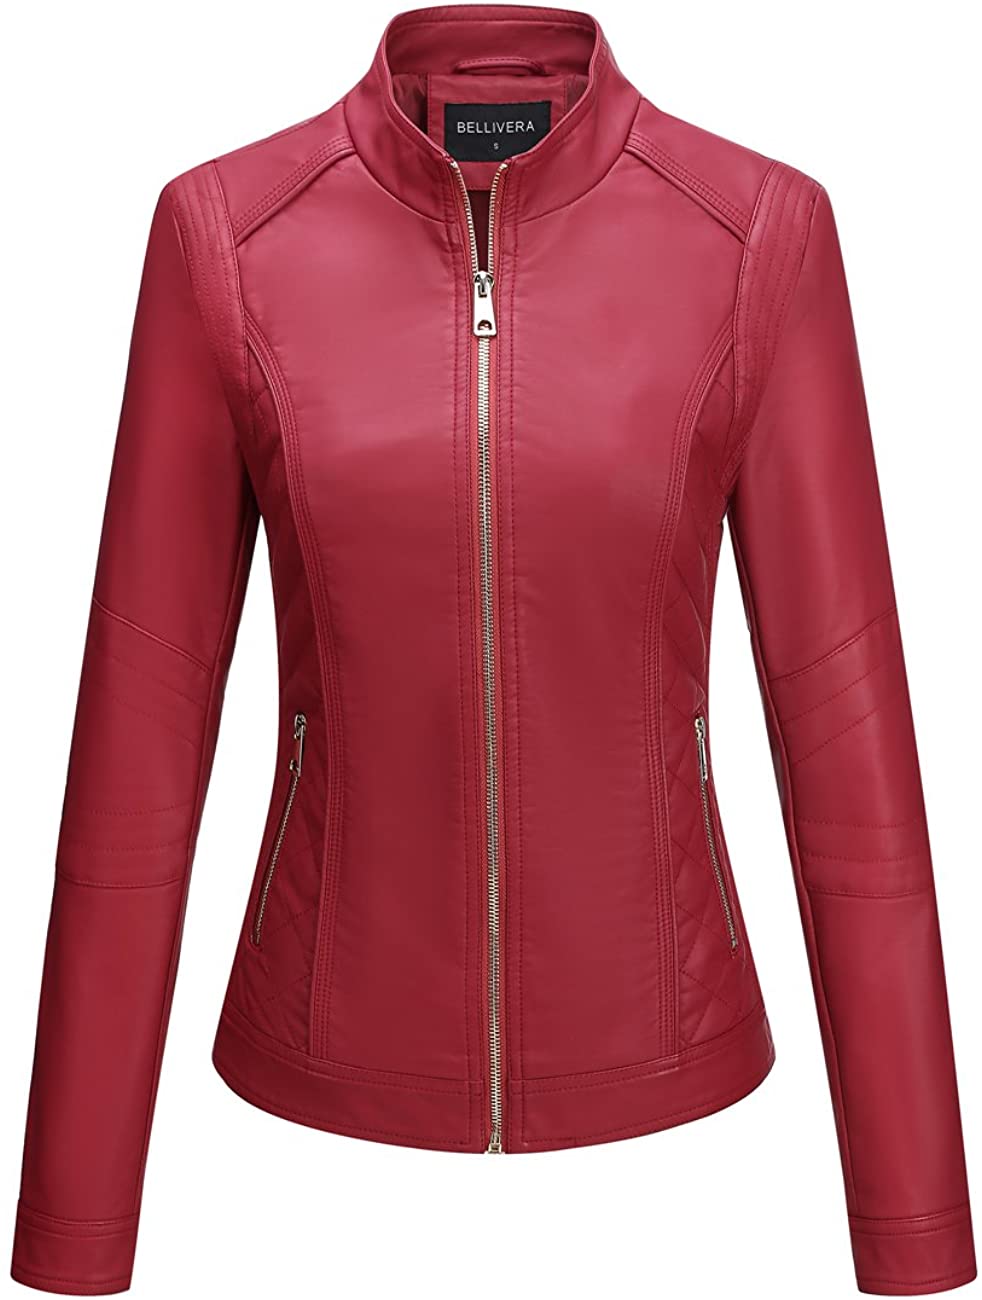 3 Colors BELLIVERA Women's PU Leather Jacket Spring Biker Jacket with Zip Pockets Vintage Short Coat for Autumn